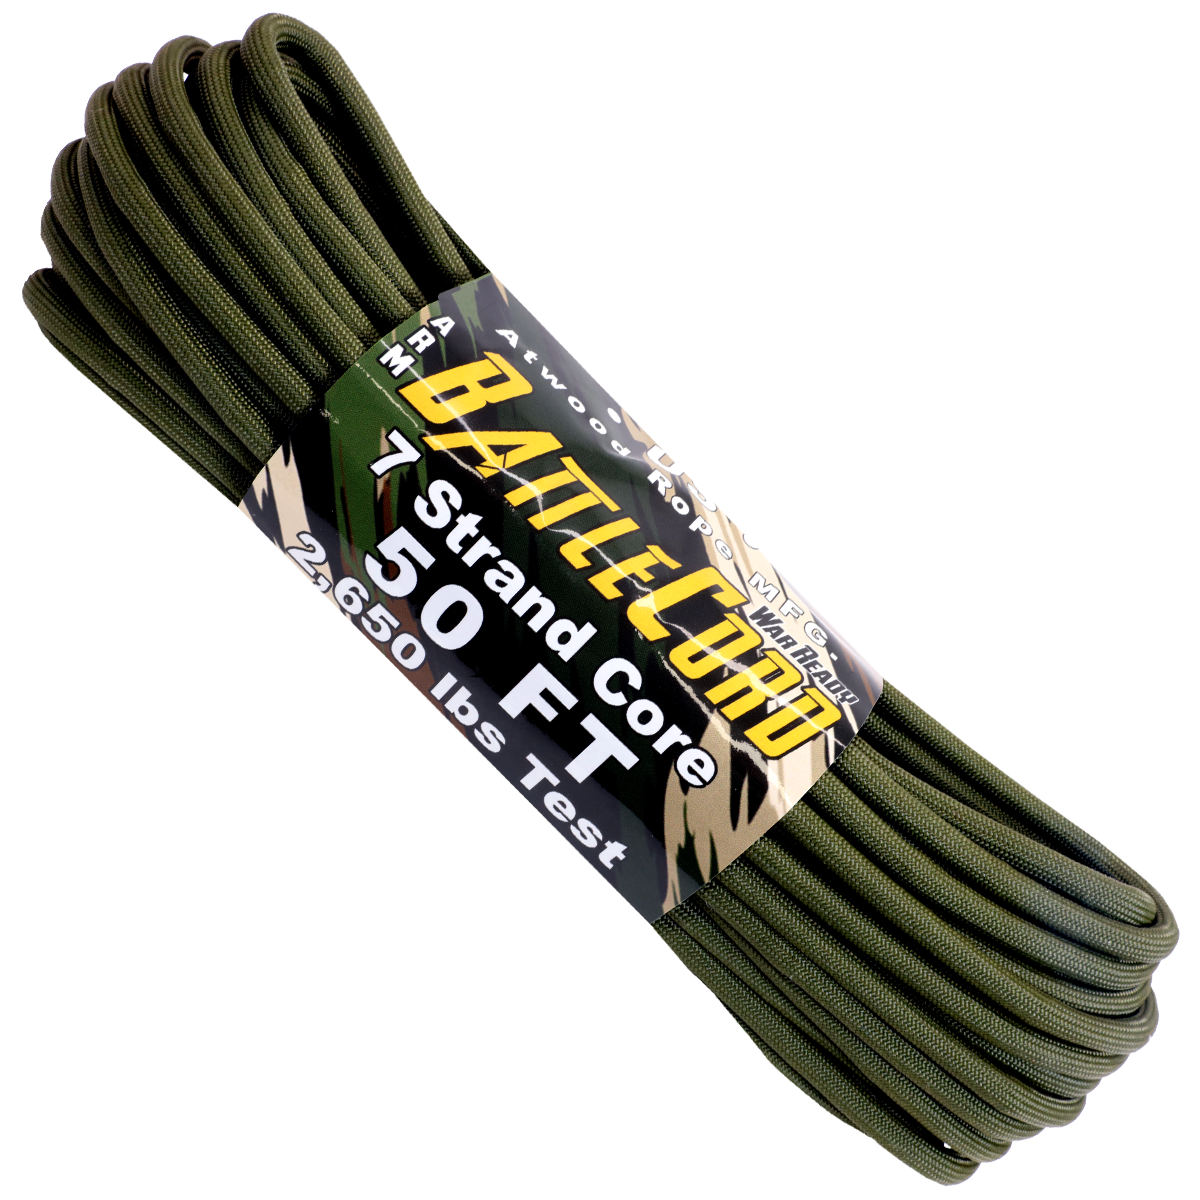 Tuf-Line Slinky Drifter Cord, 50-ft